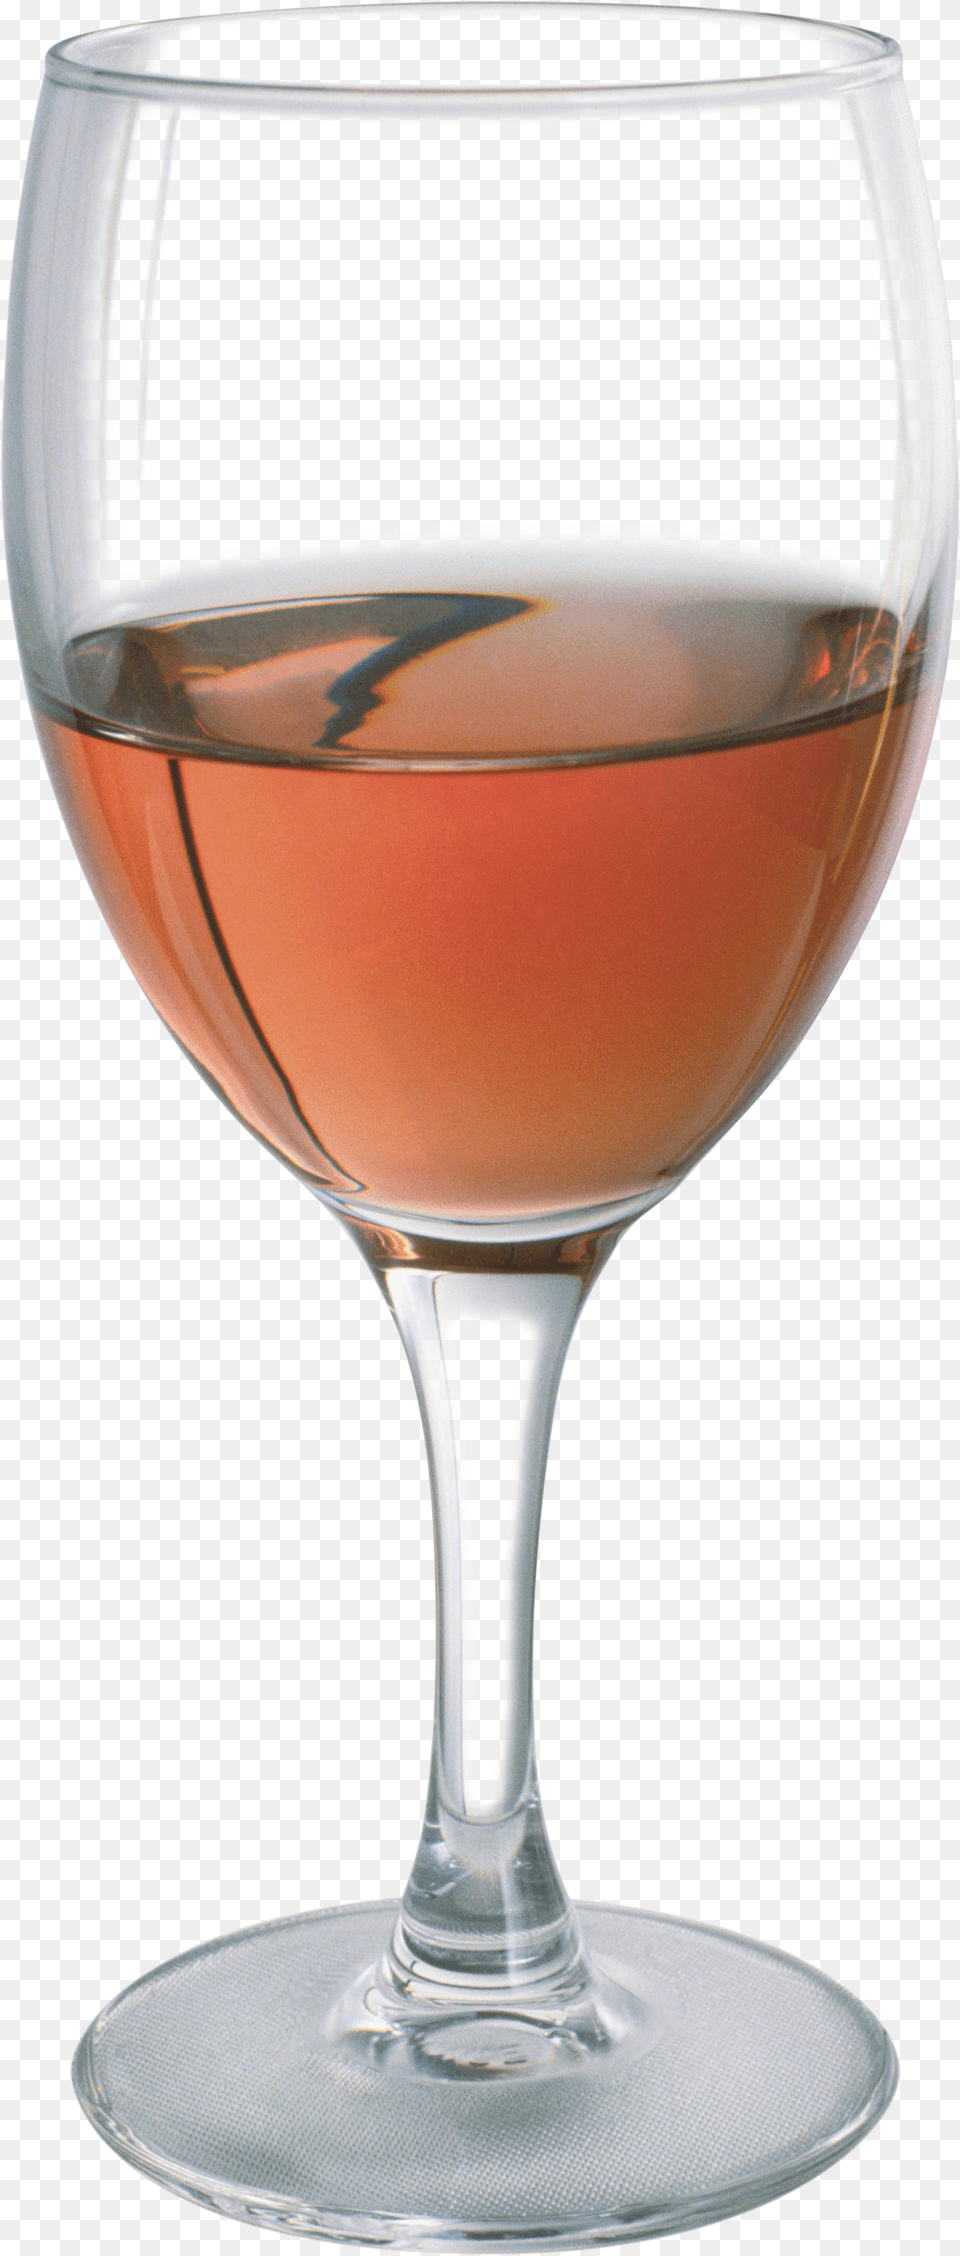 Wine Glass, Alcohol, Beverage, Liquor, Wine Glass Free Transparent Png